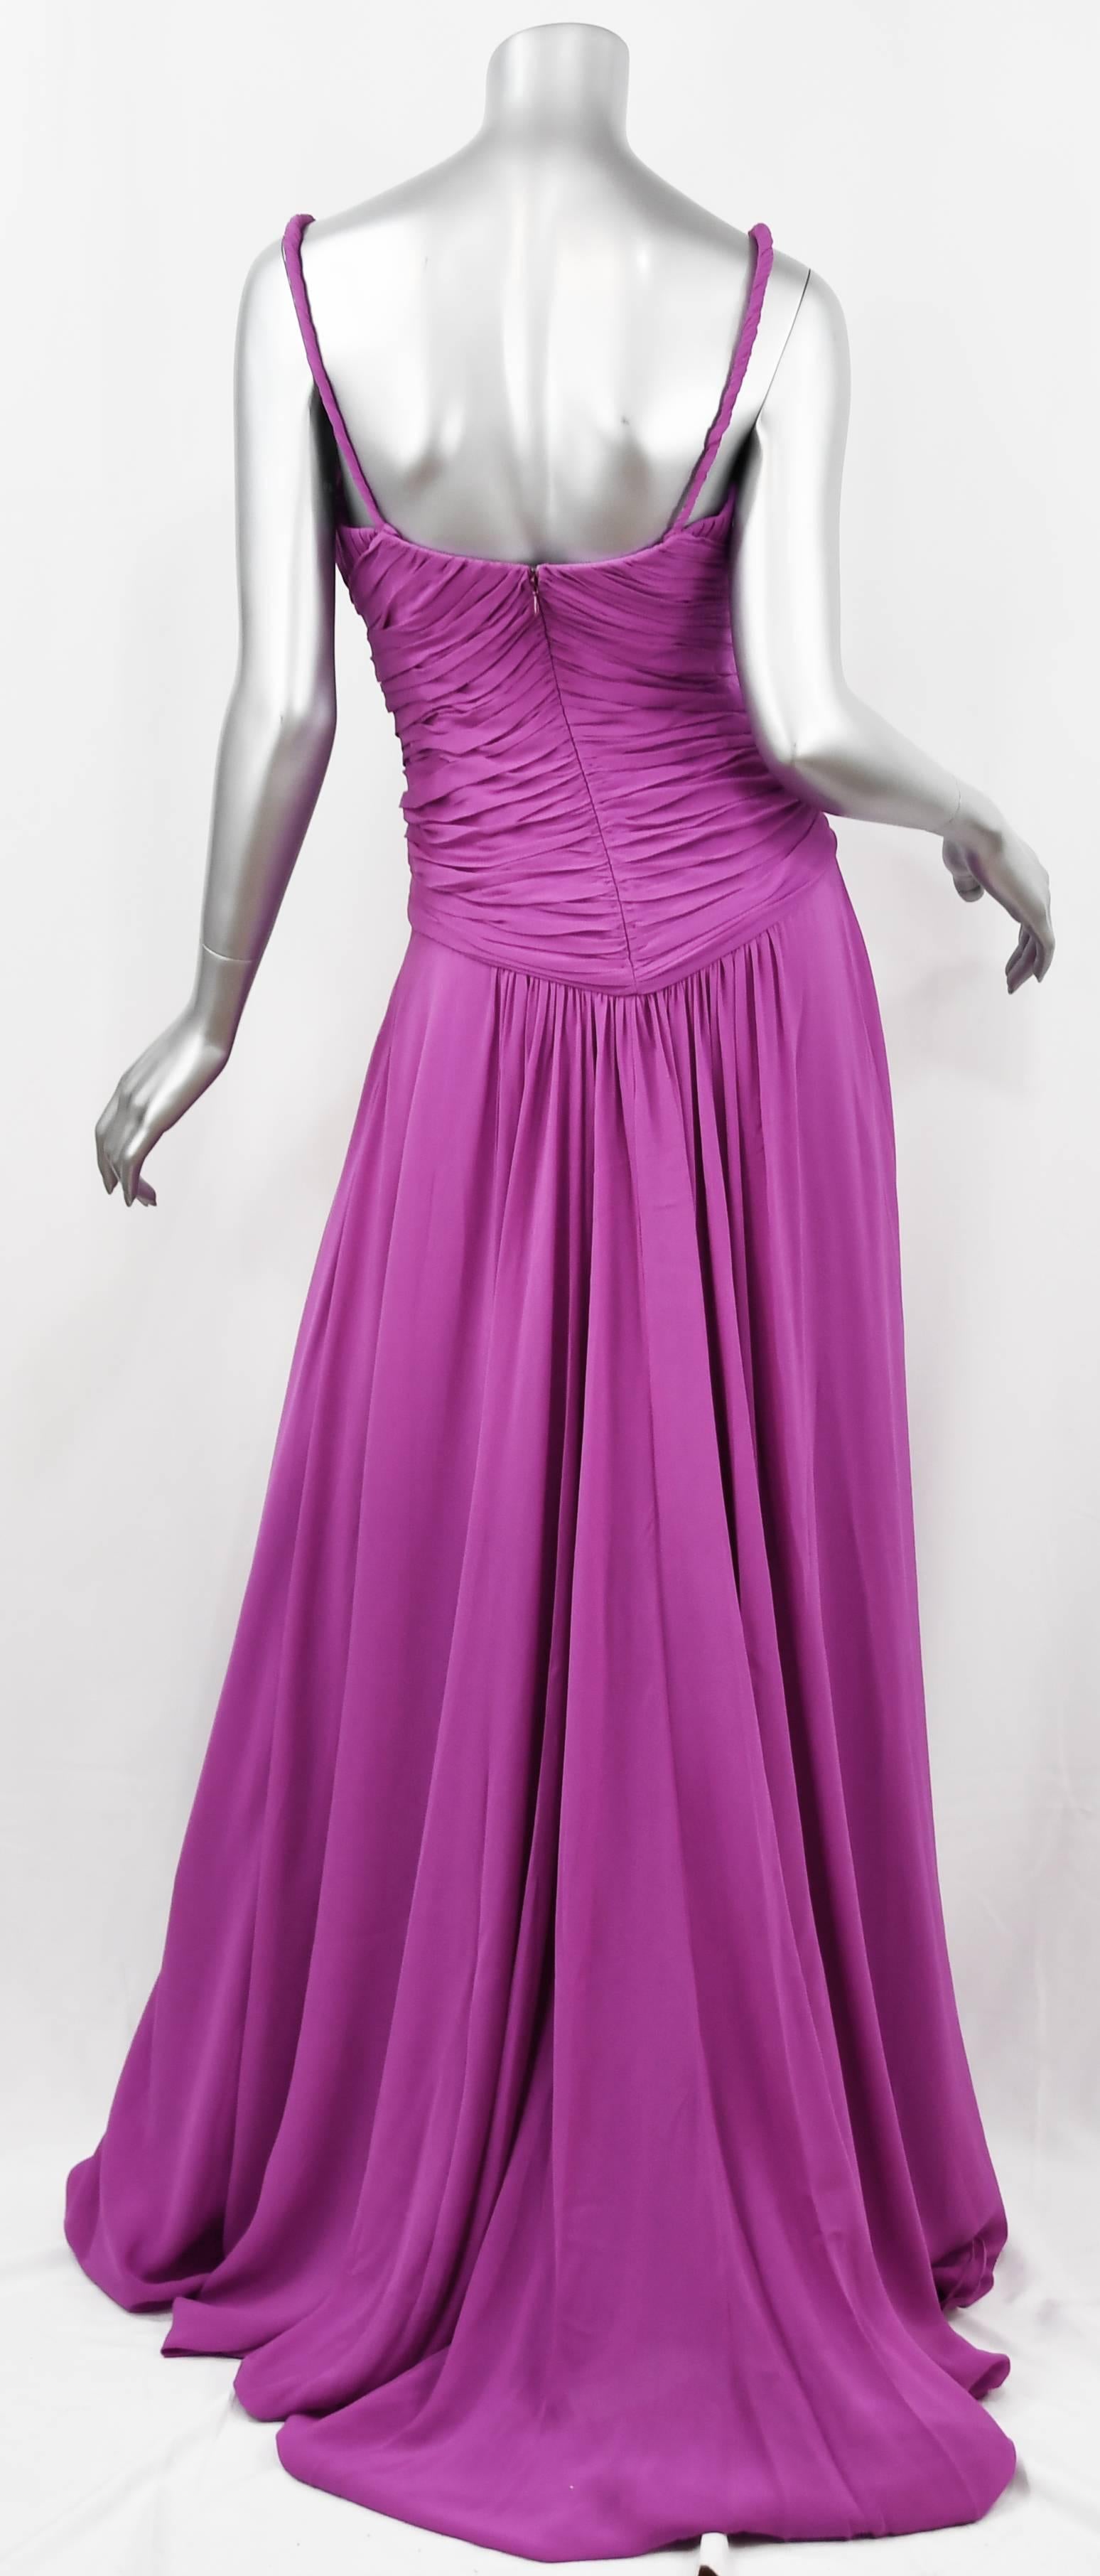 Women's Emanuel Ungaro Long Chiffon Gown in Magenta, Size 4 For Sale